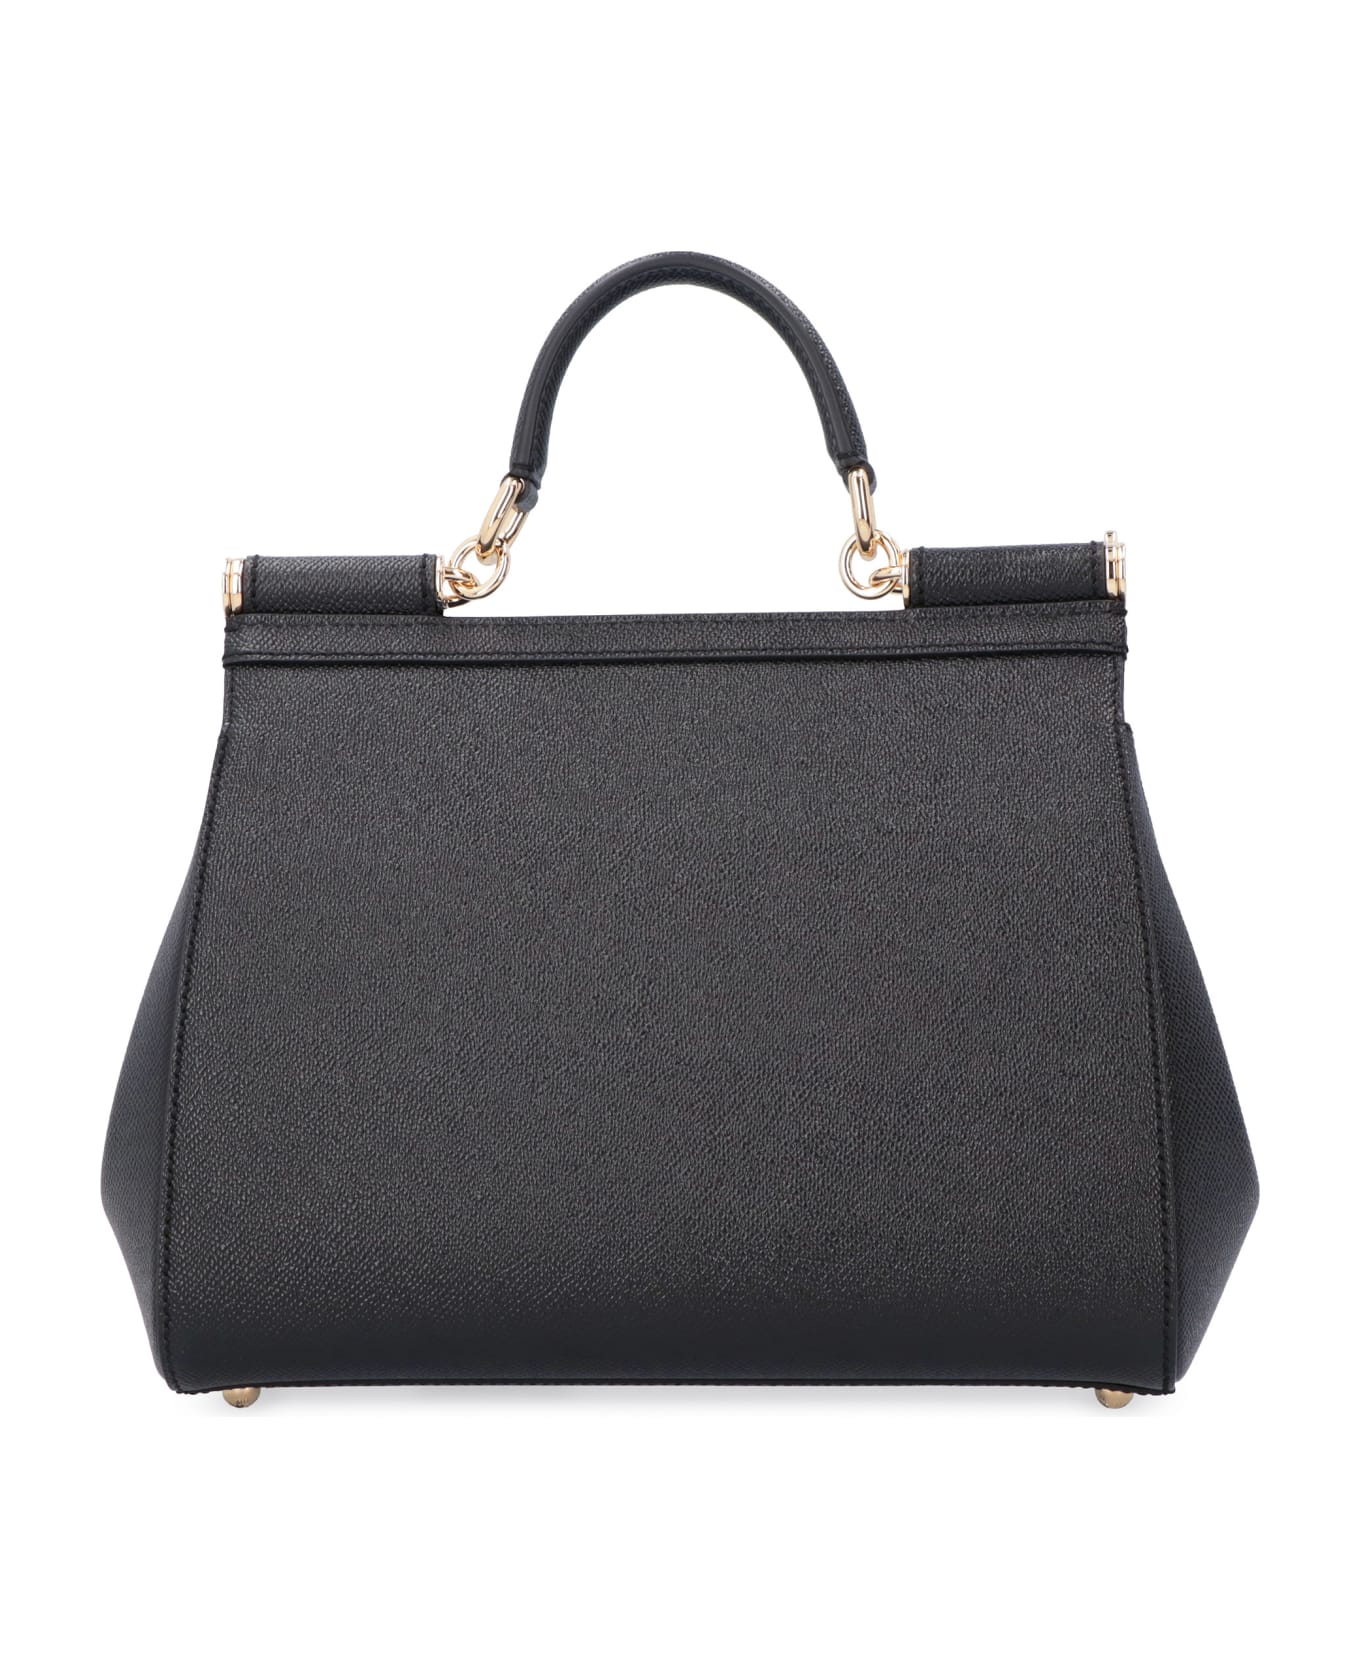 Dolce & Gabbana Sicily Leather Handbag - black